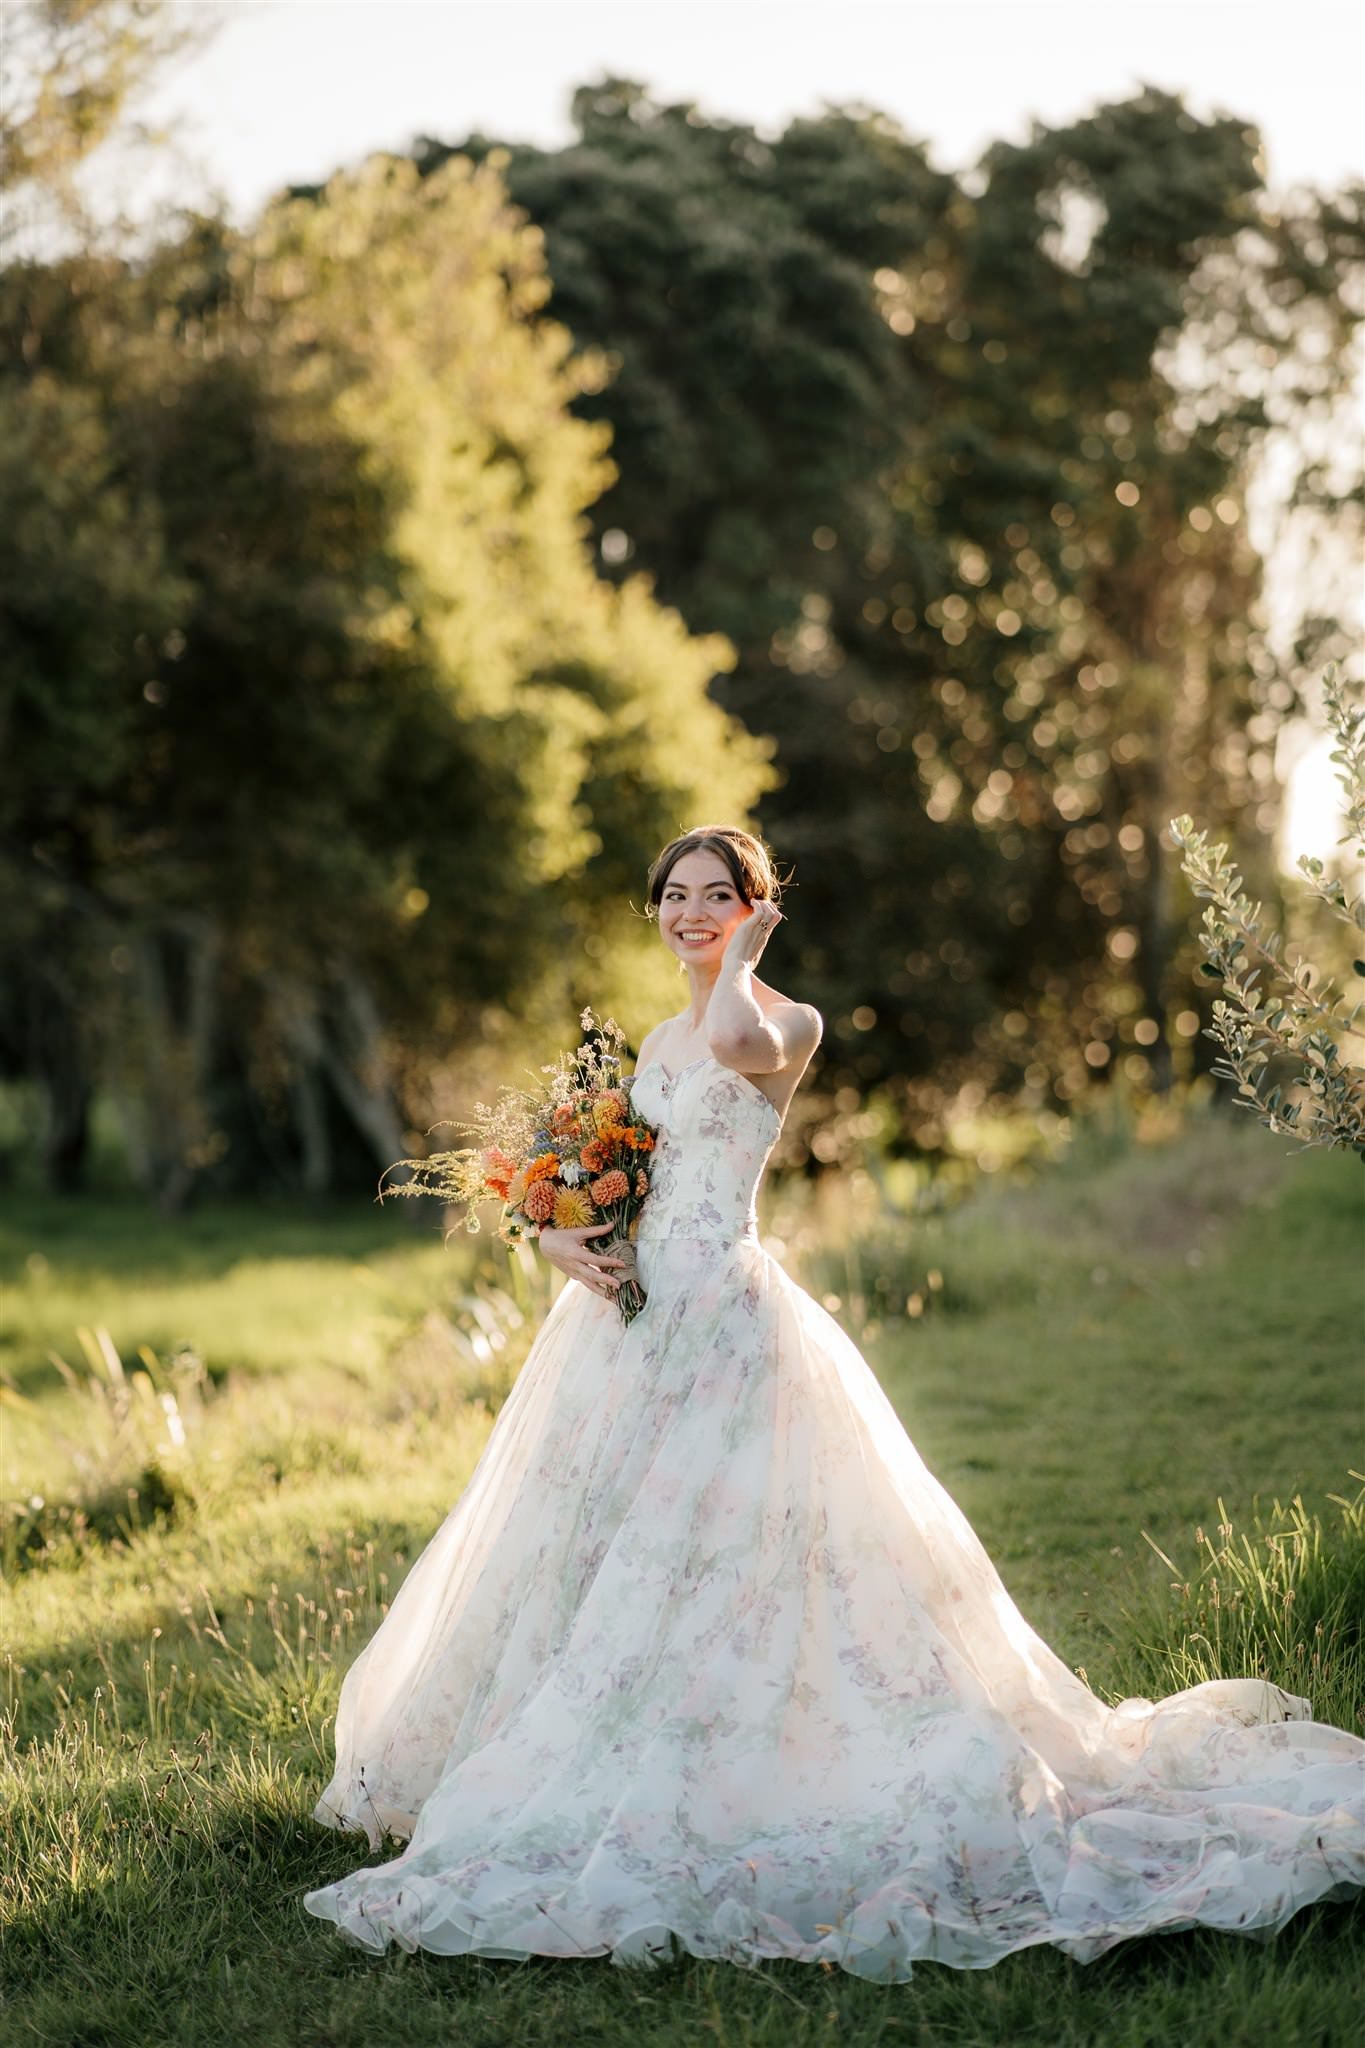 home-backyard-wedding-diy-best-kiwi-traditional-korean-hanbok-wedding-gown-Choson-ot-auckland-wedding-photographer-videography-dear-white-productions (55).jpg